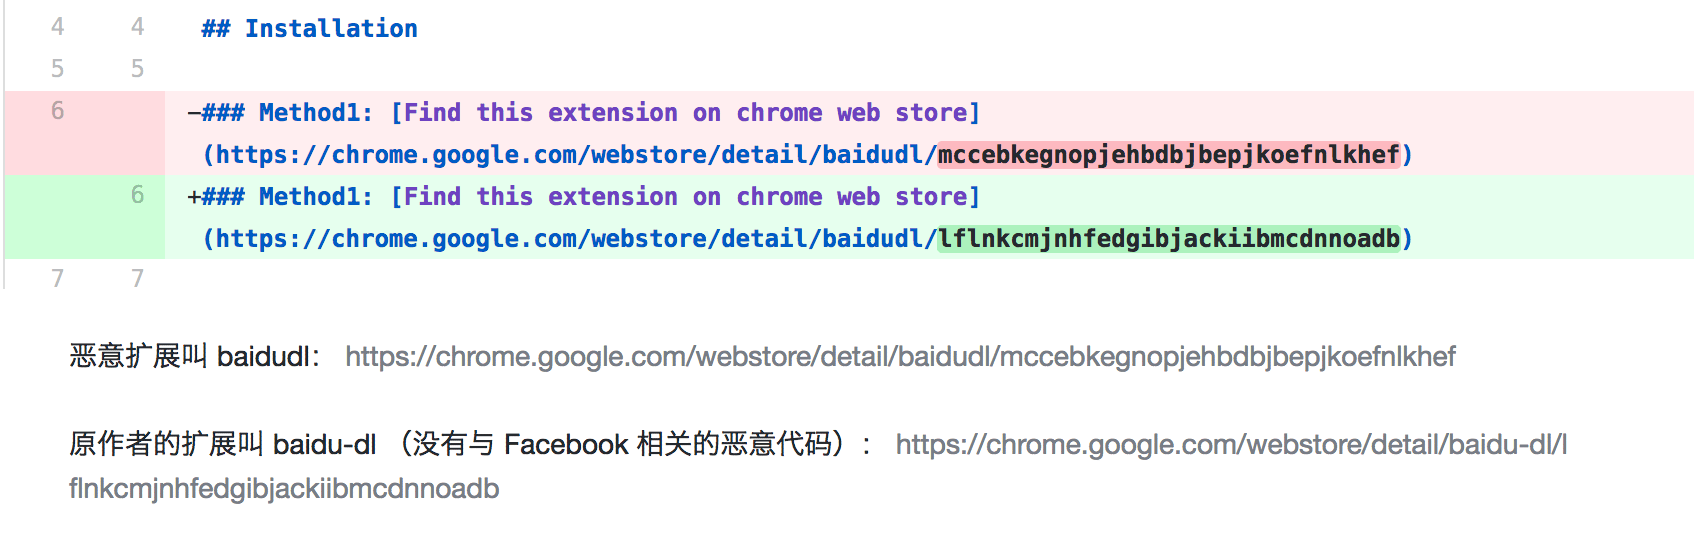 baidu-dl - 从百度盘获取「直接下载」及「高速下载」链接[Chrome] 3